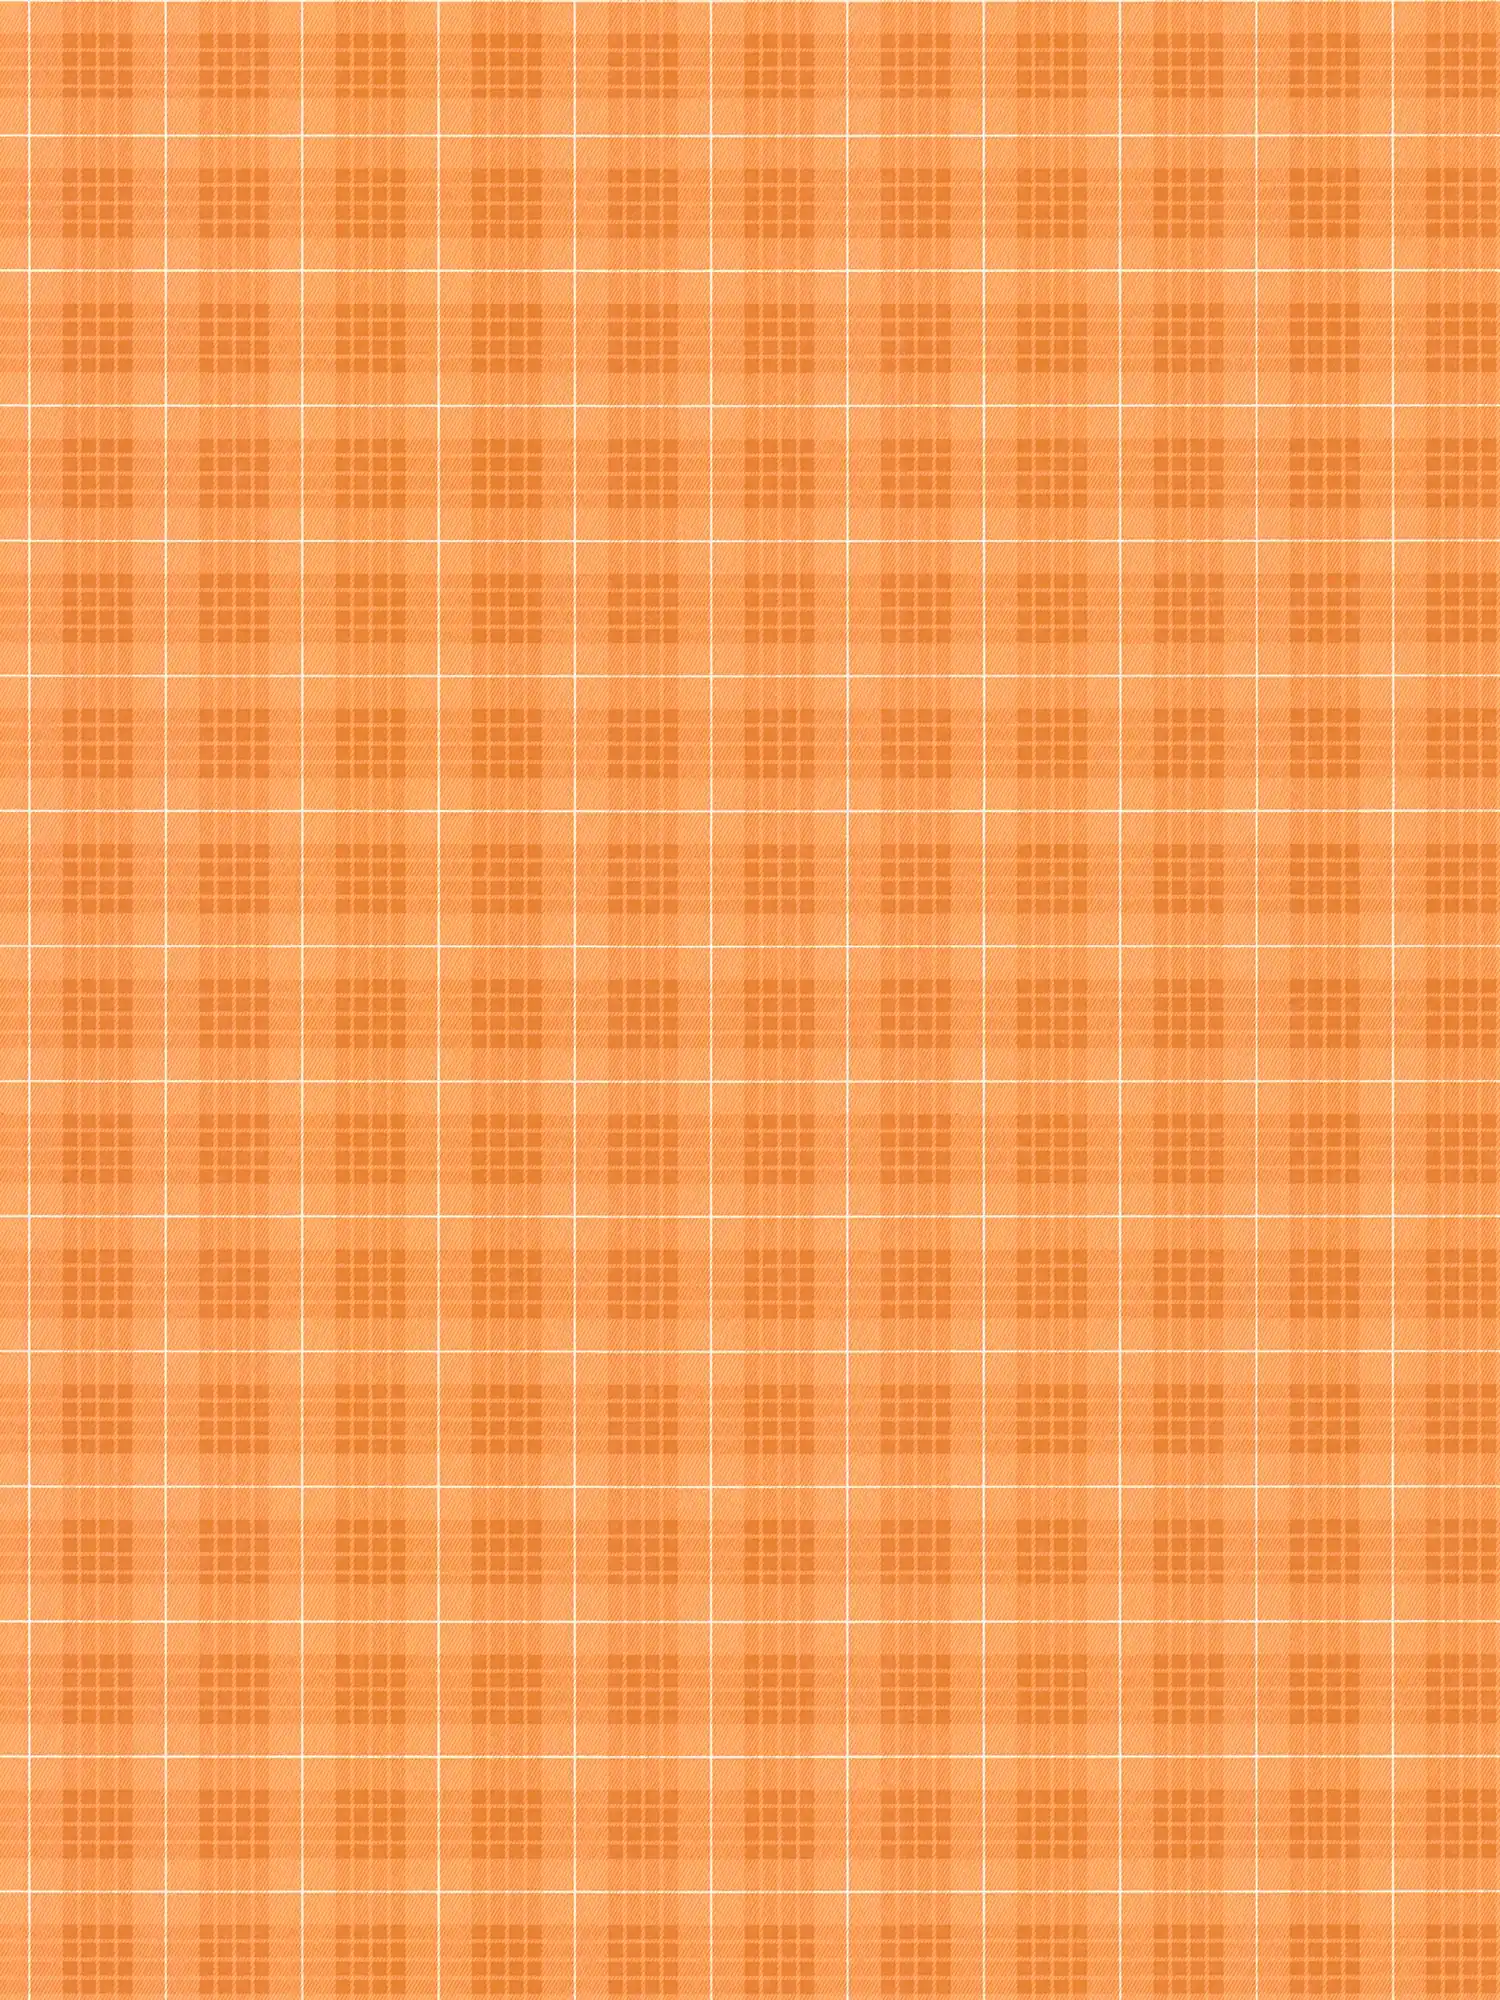         Textile-look wallpaper plaid flannel look - orange, white
    